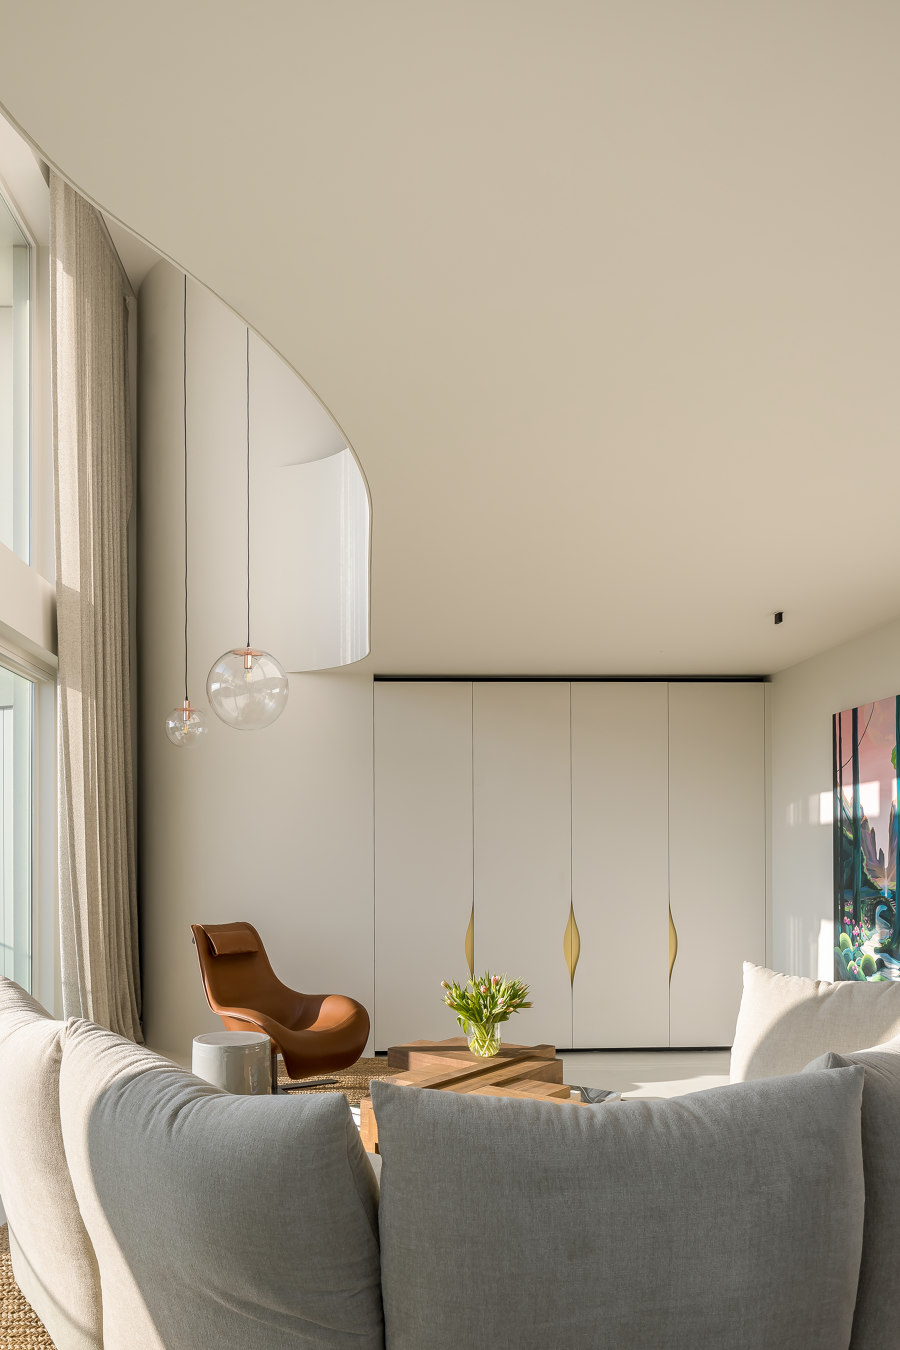 Duplex Condo | Pièces d'habitation | Claerhout - Van Biervliet